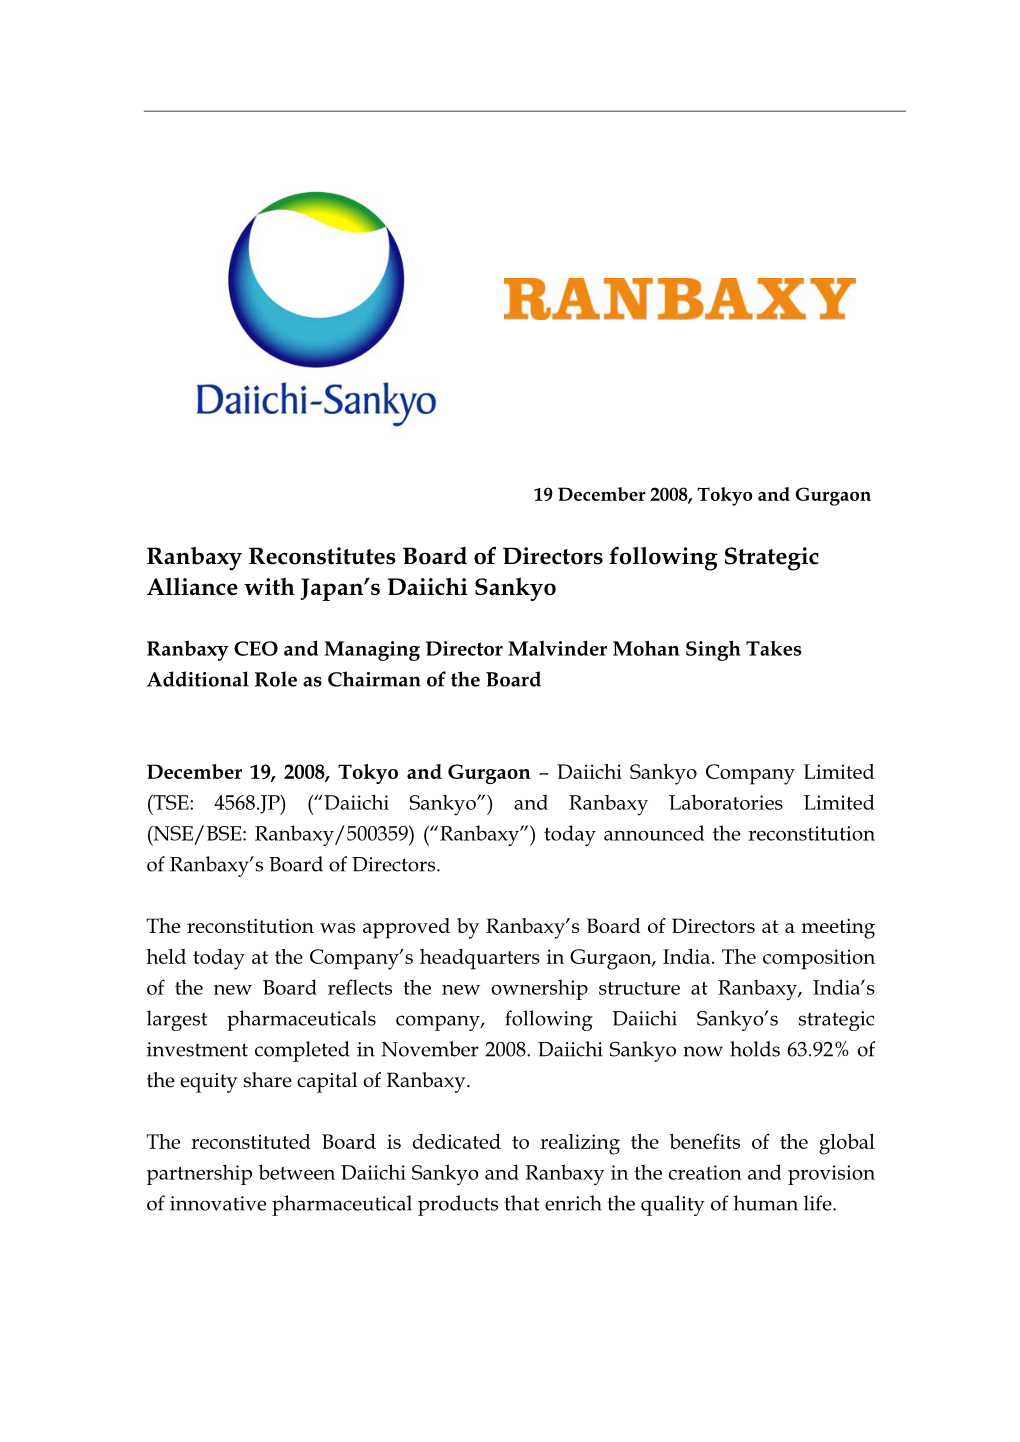 Ranbaxy Reconstitutes Board of Directors Following Strategic Alliance with Japan’S Daiichi Sankyo